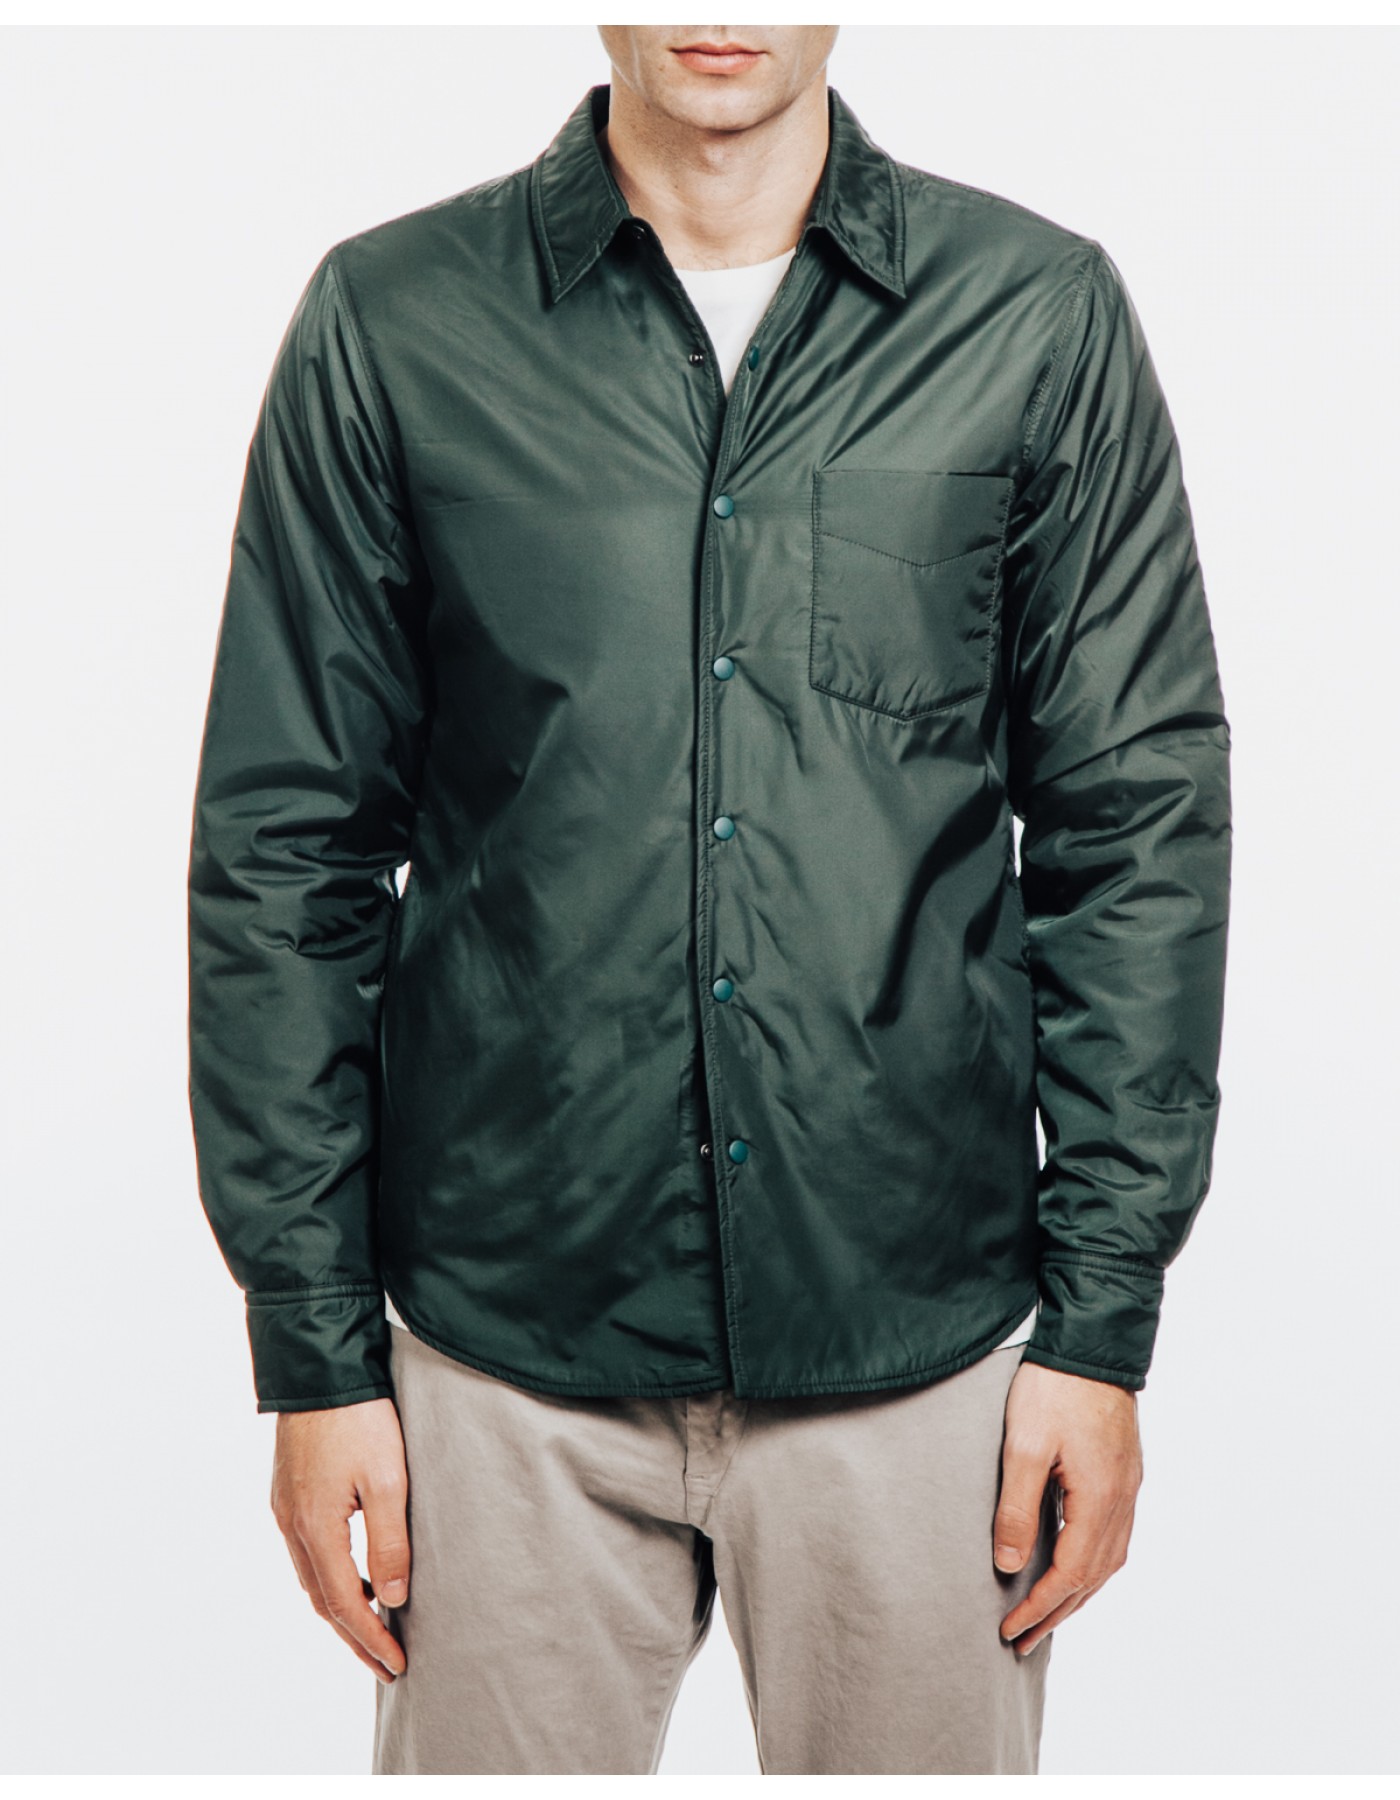 aspesi-marvin-shirt-jacket-dark-green-1.jpg